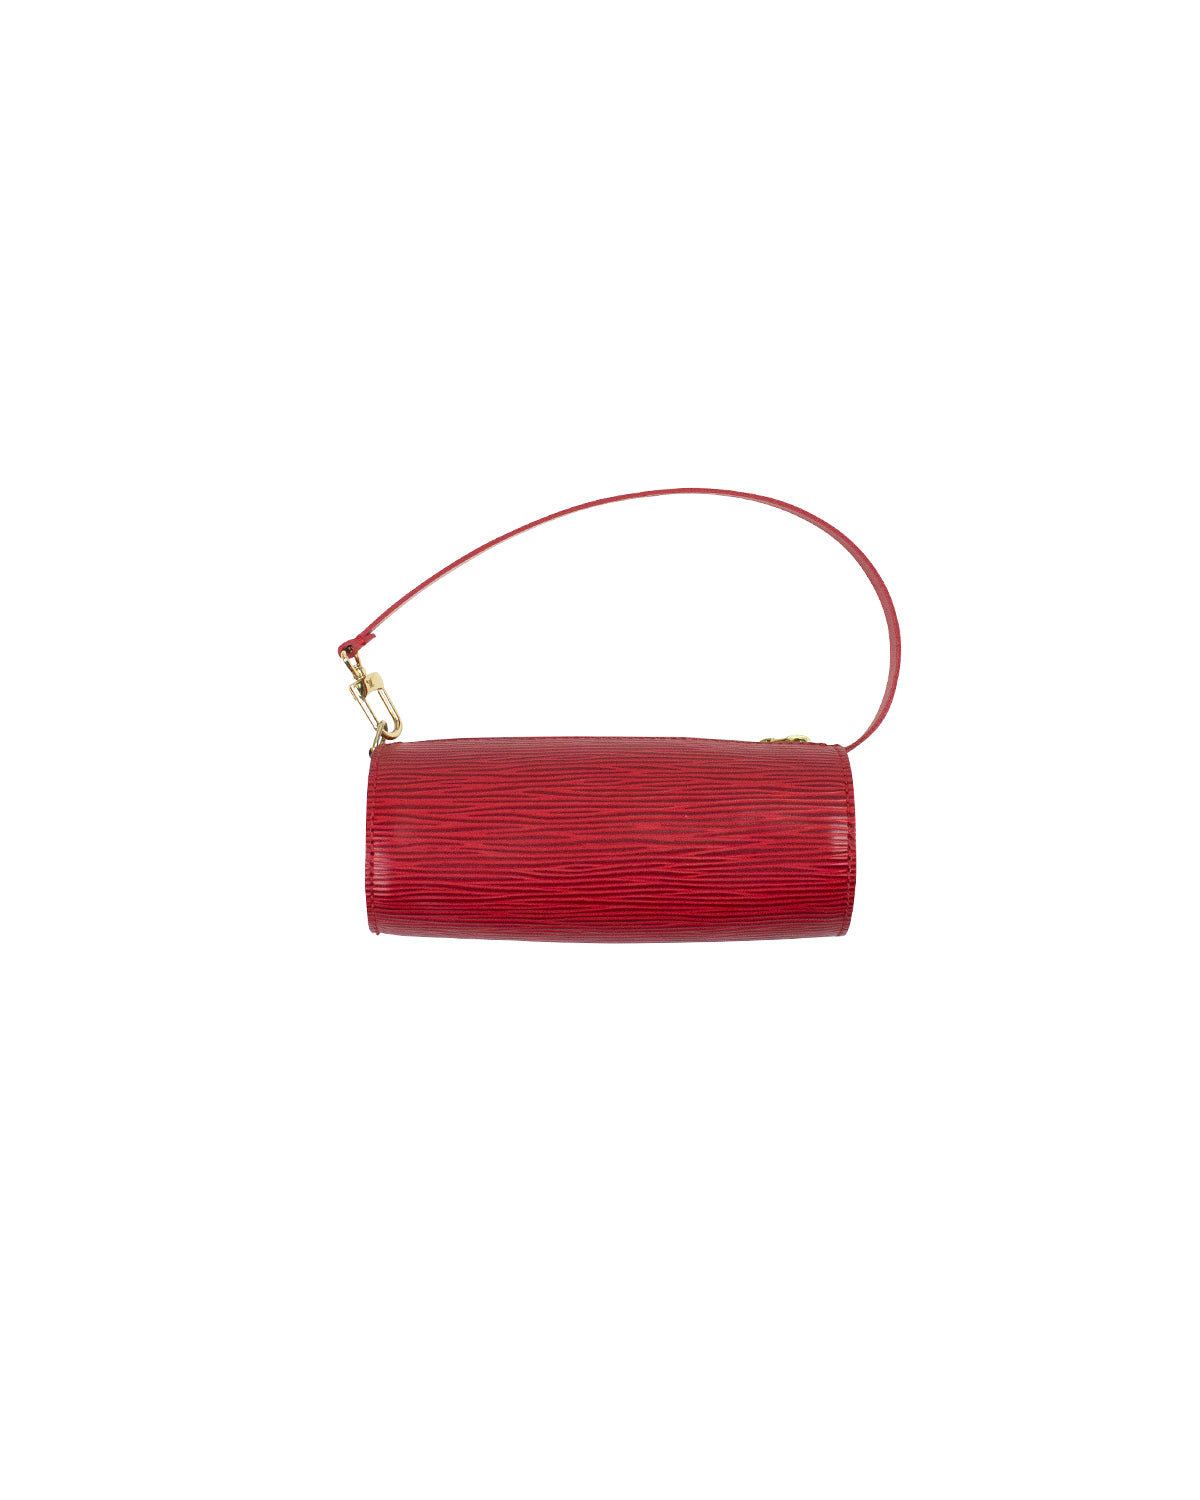 1158. A Louis Vuitton Red Epi Leather Soufflot Handbag - May 2013 -  ASPIRE AUCTIONS